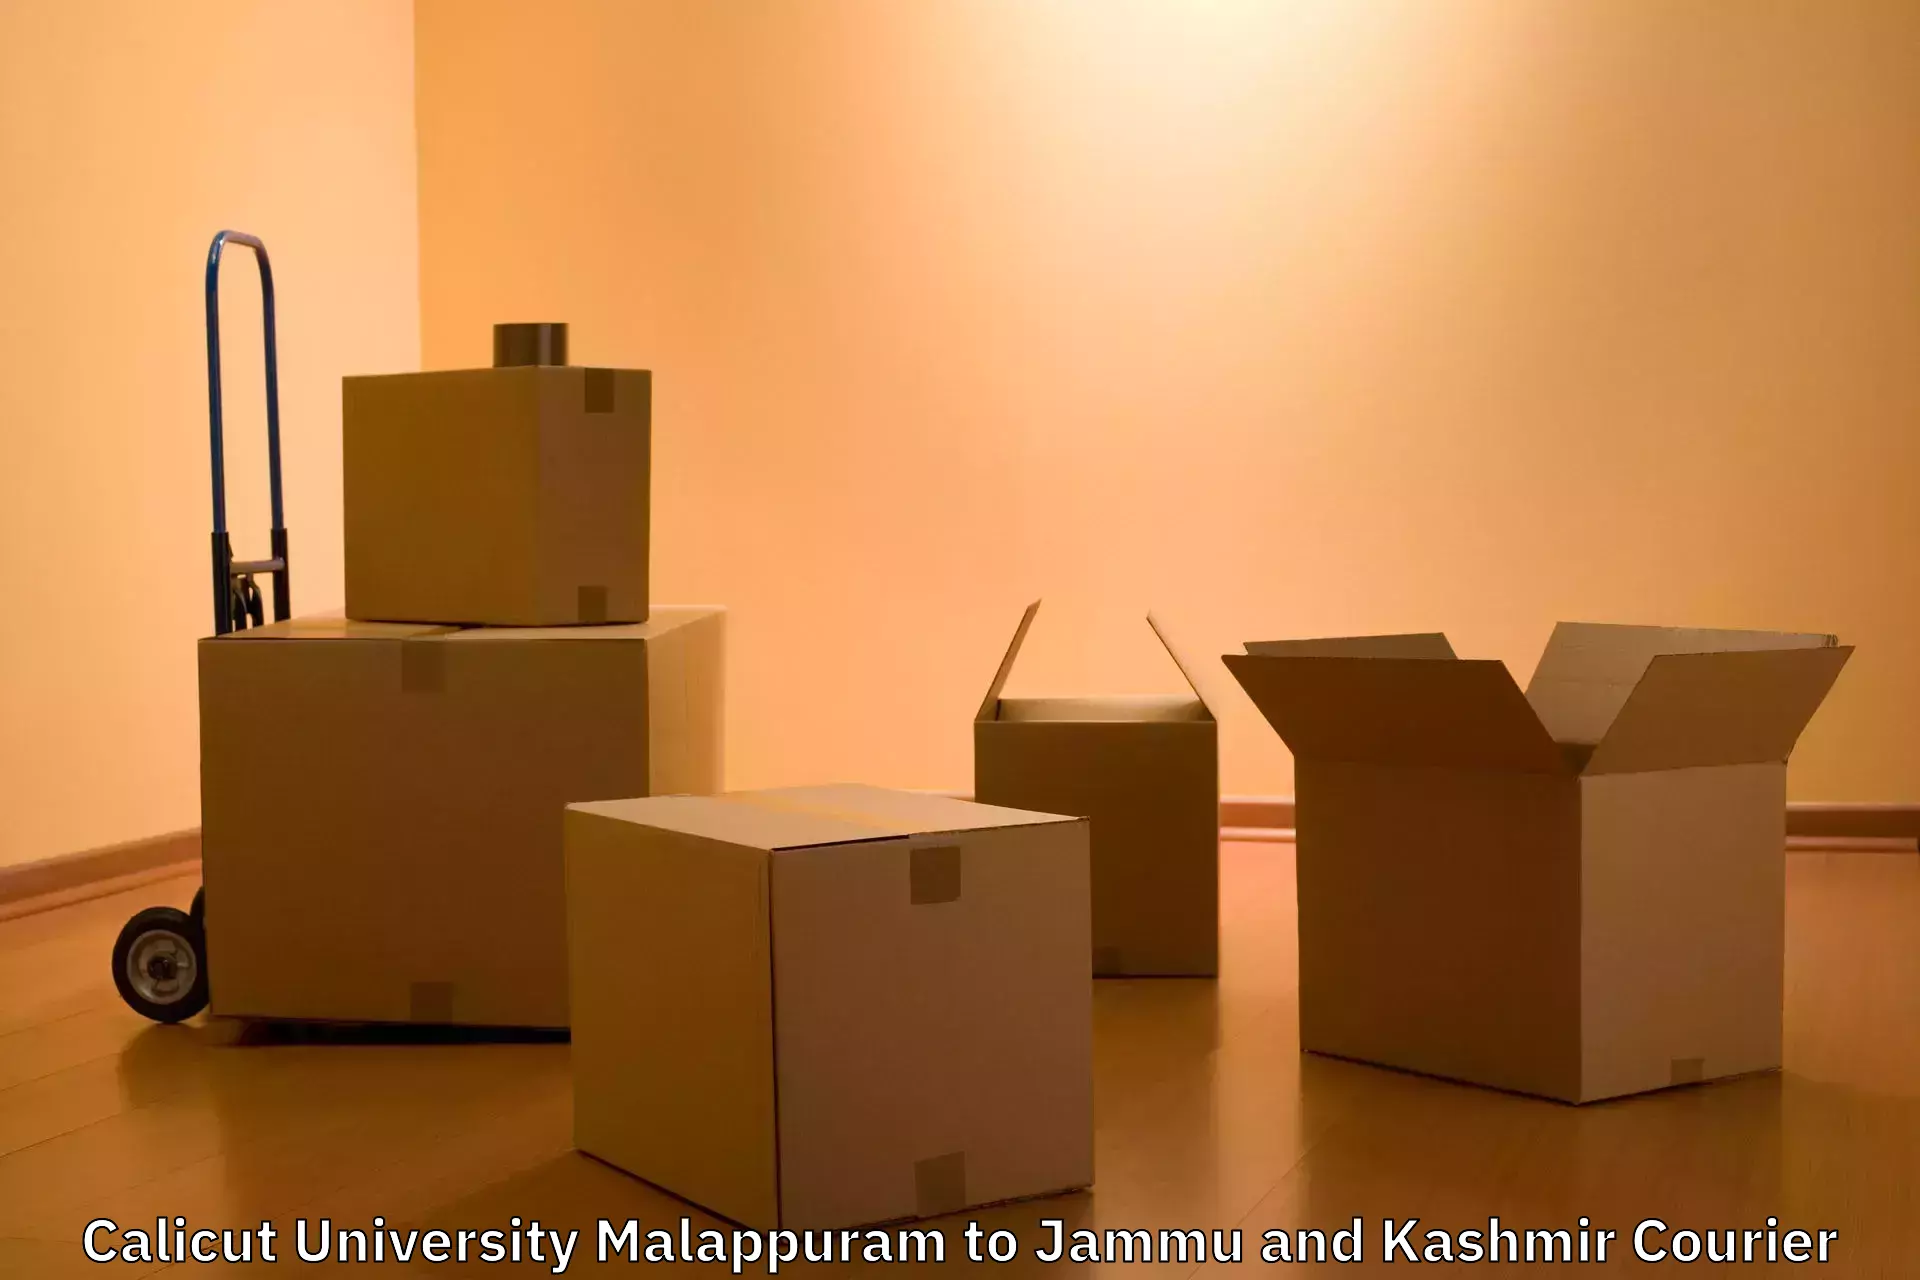 Baggage transport technology Calicut University Malappuram to University of Jammu